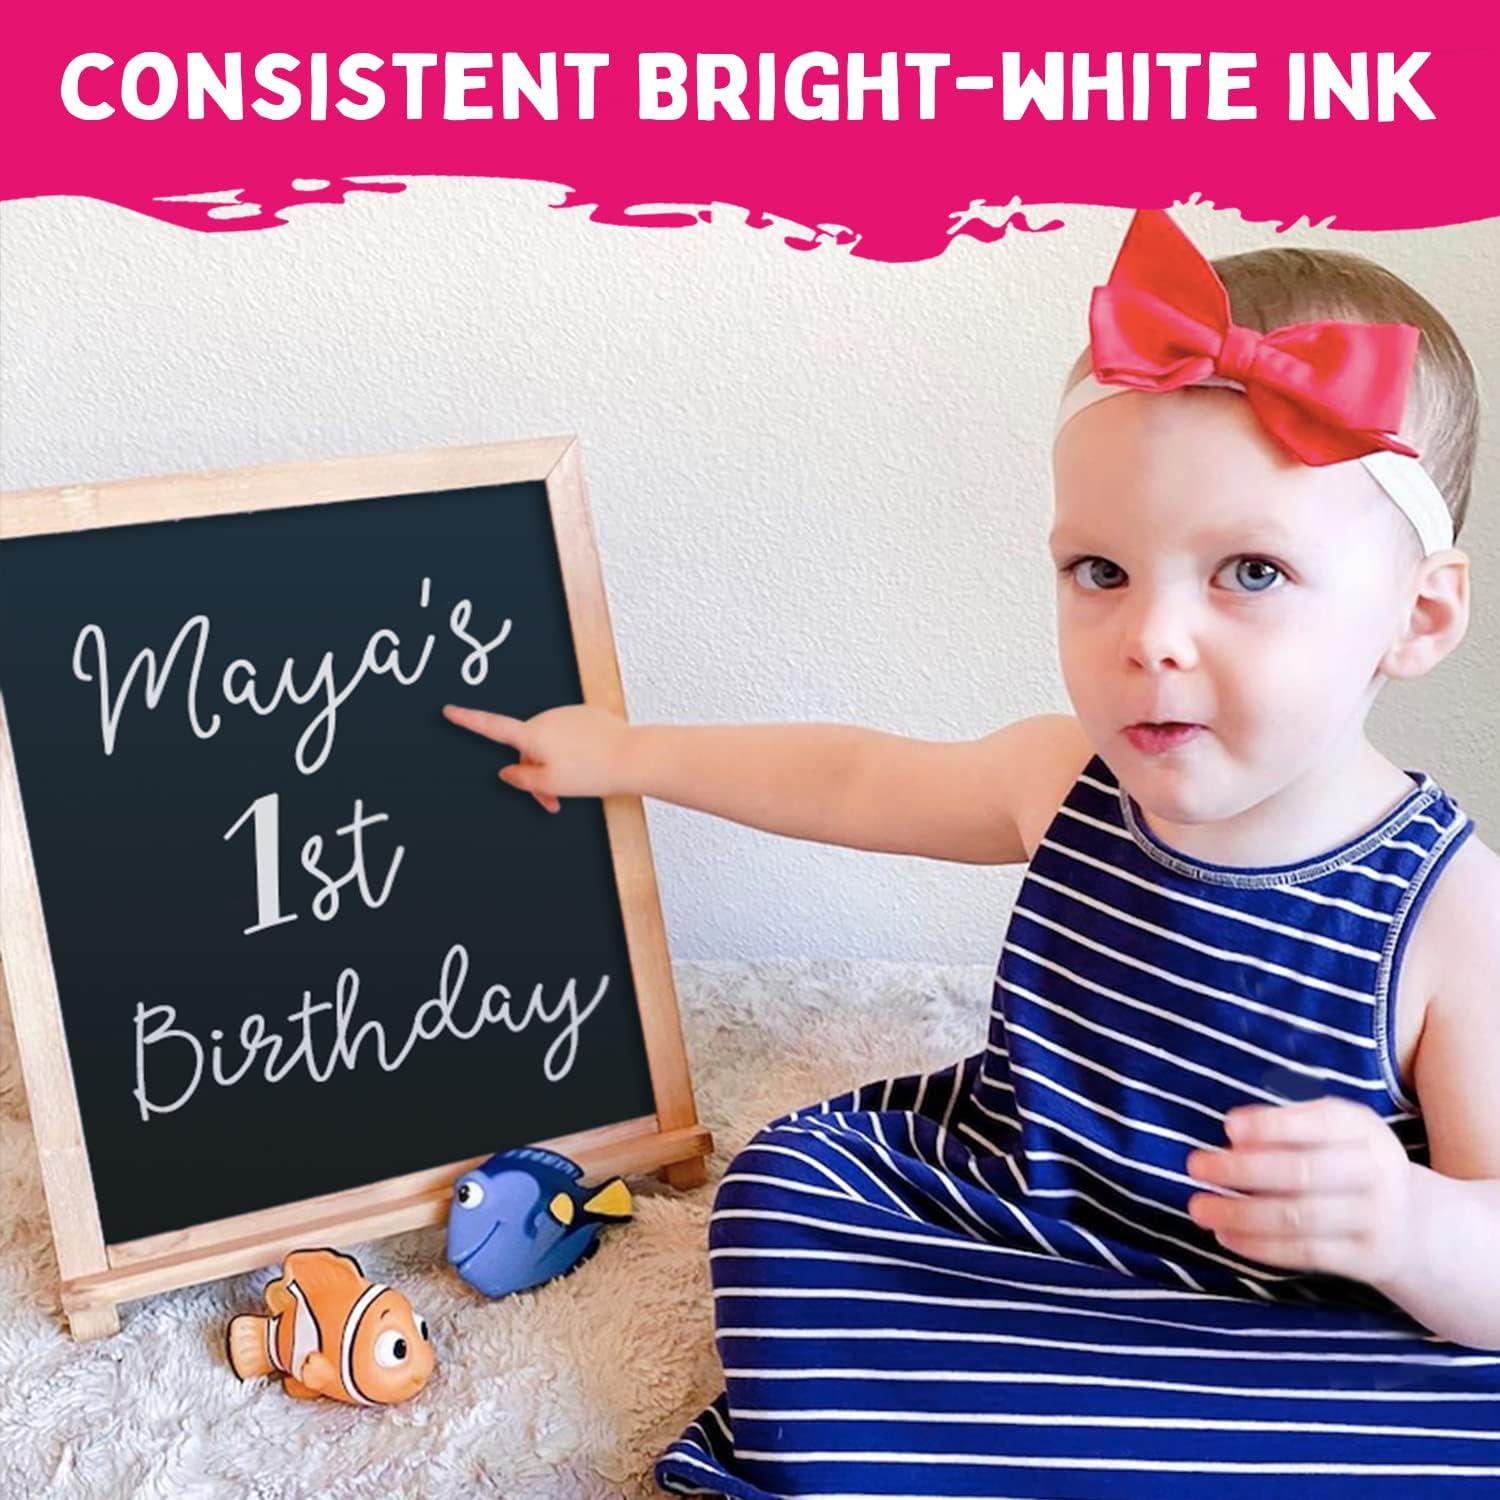 Chalkola White Chalk Markers Fine Tip (4 Pack 3mm) - Wet & Dry Erase Chalk Pens for Blackboard, Chalkboards, Windows, Signs, Glass, Bistro - 3mm